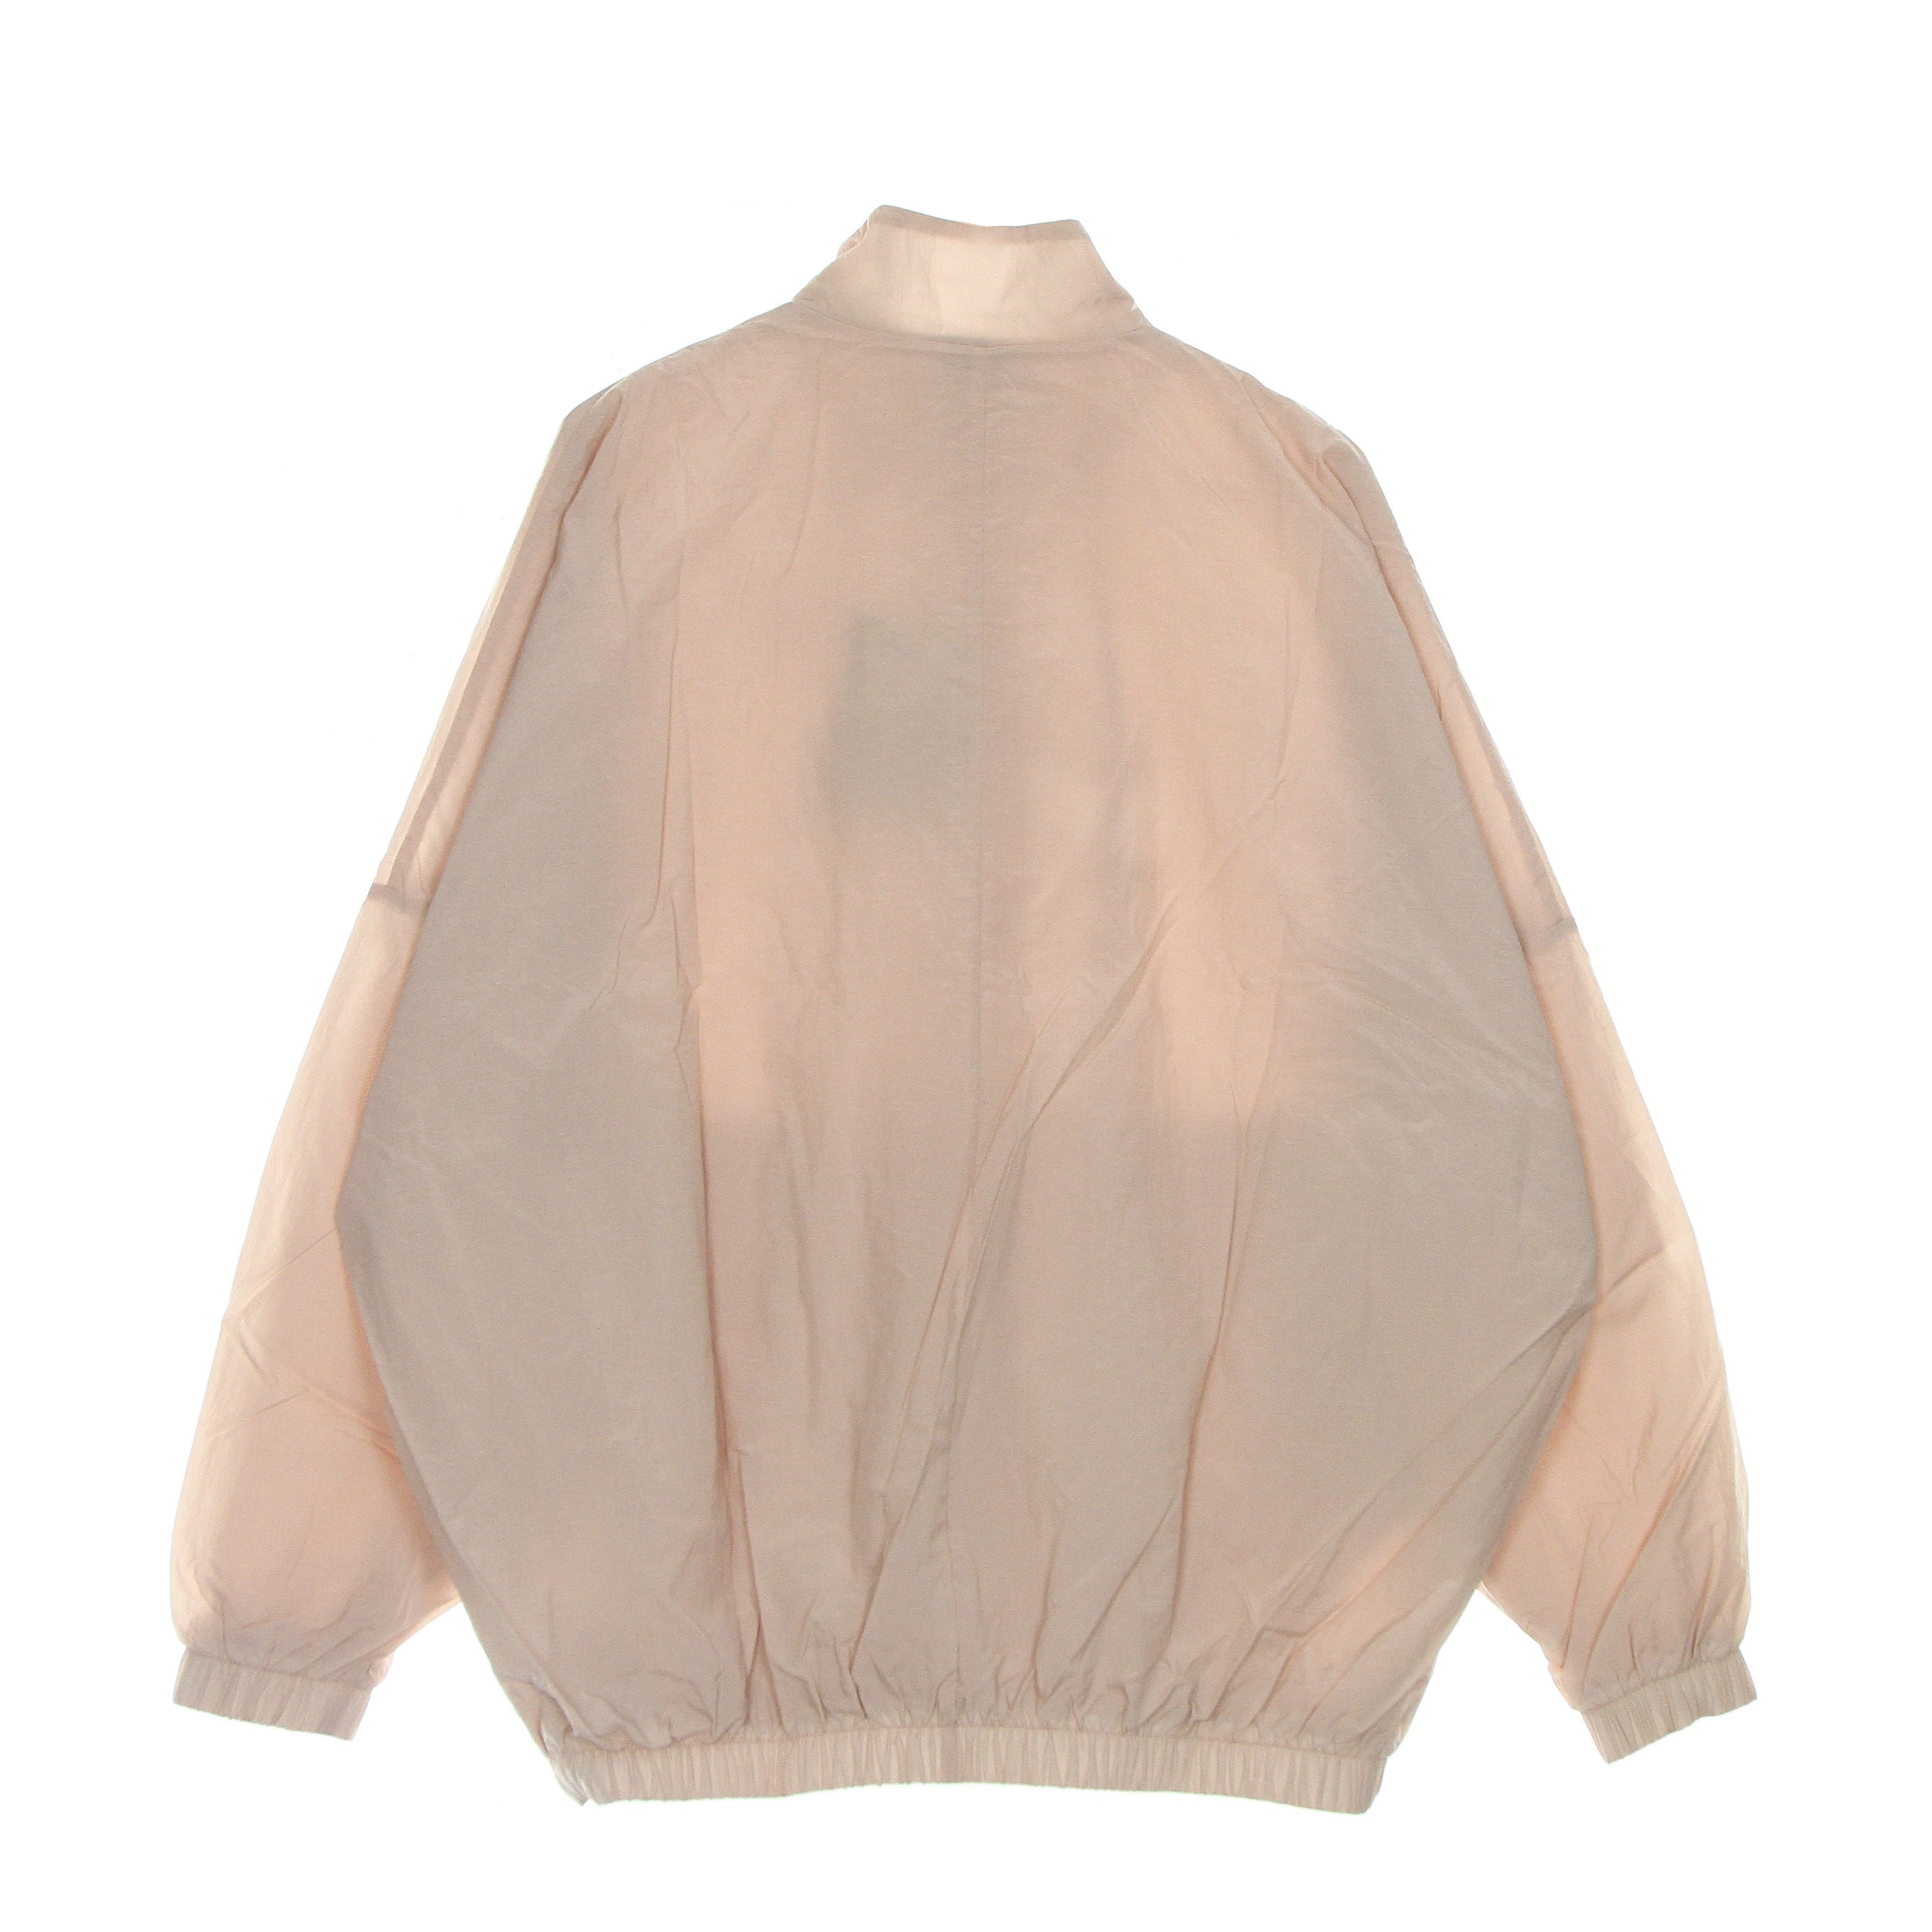 Nike, Giacca Tuta Donna Essential Woven Jacket, Pink Oxford/white